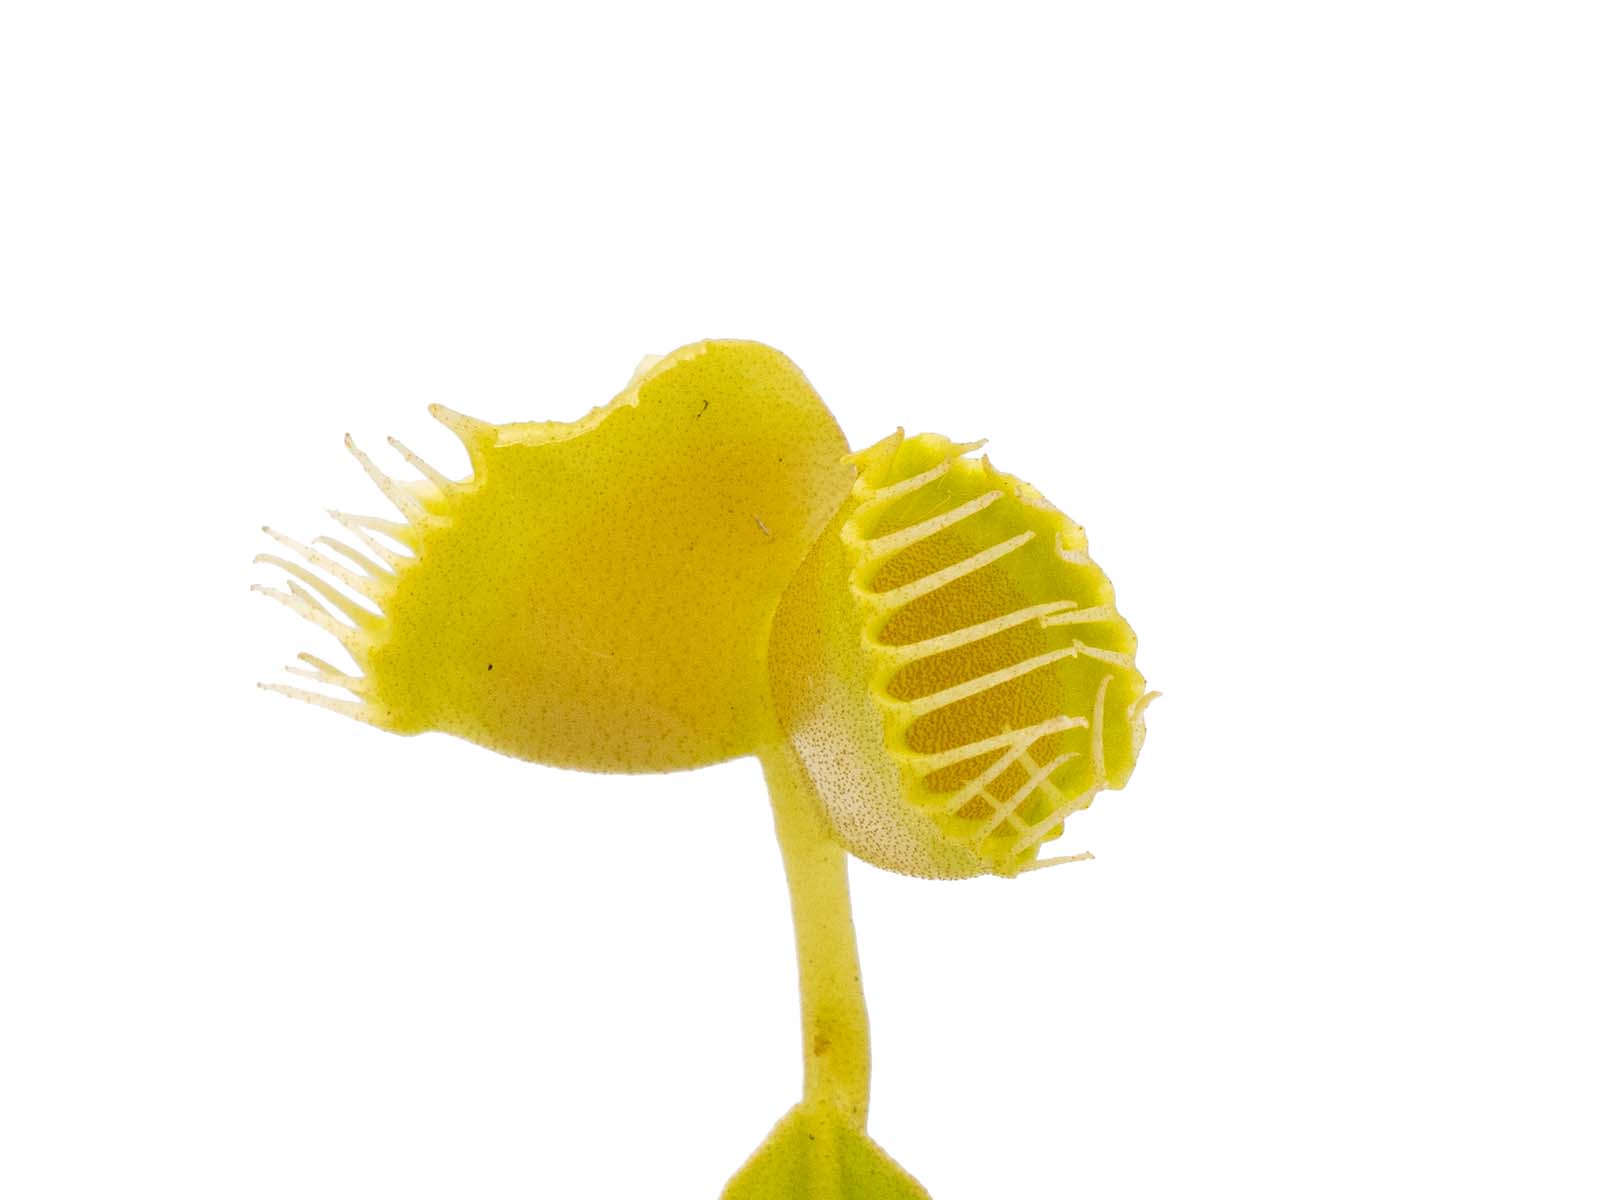 Dionaea muscipula - Double Trouble